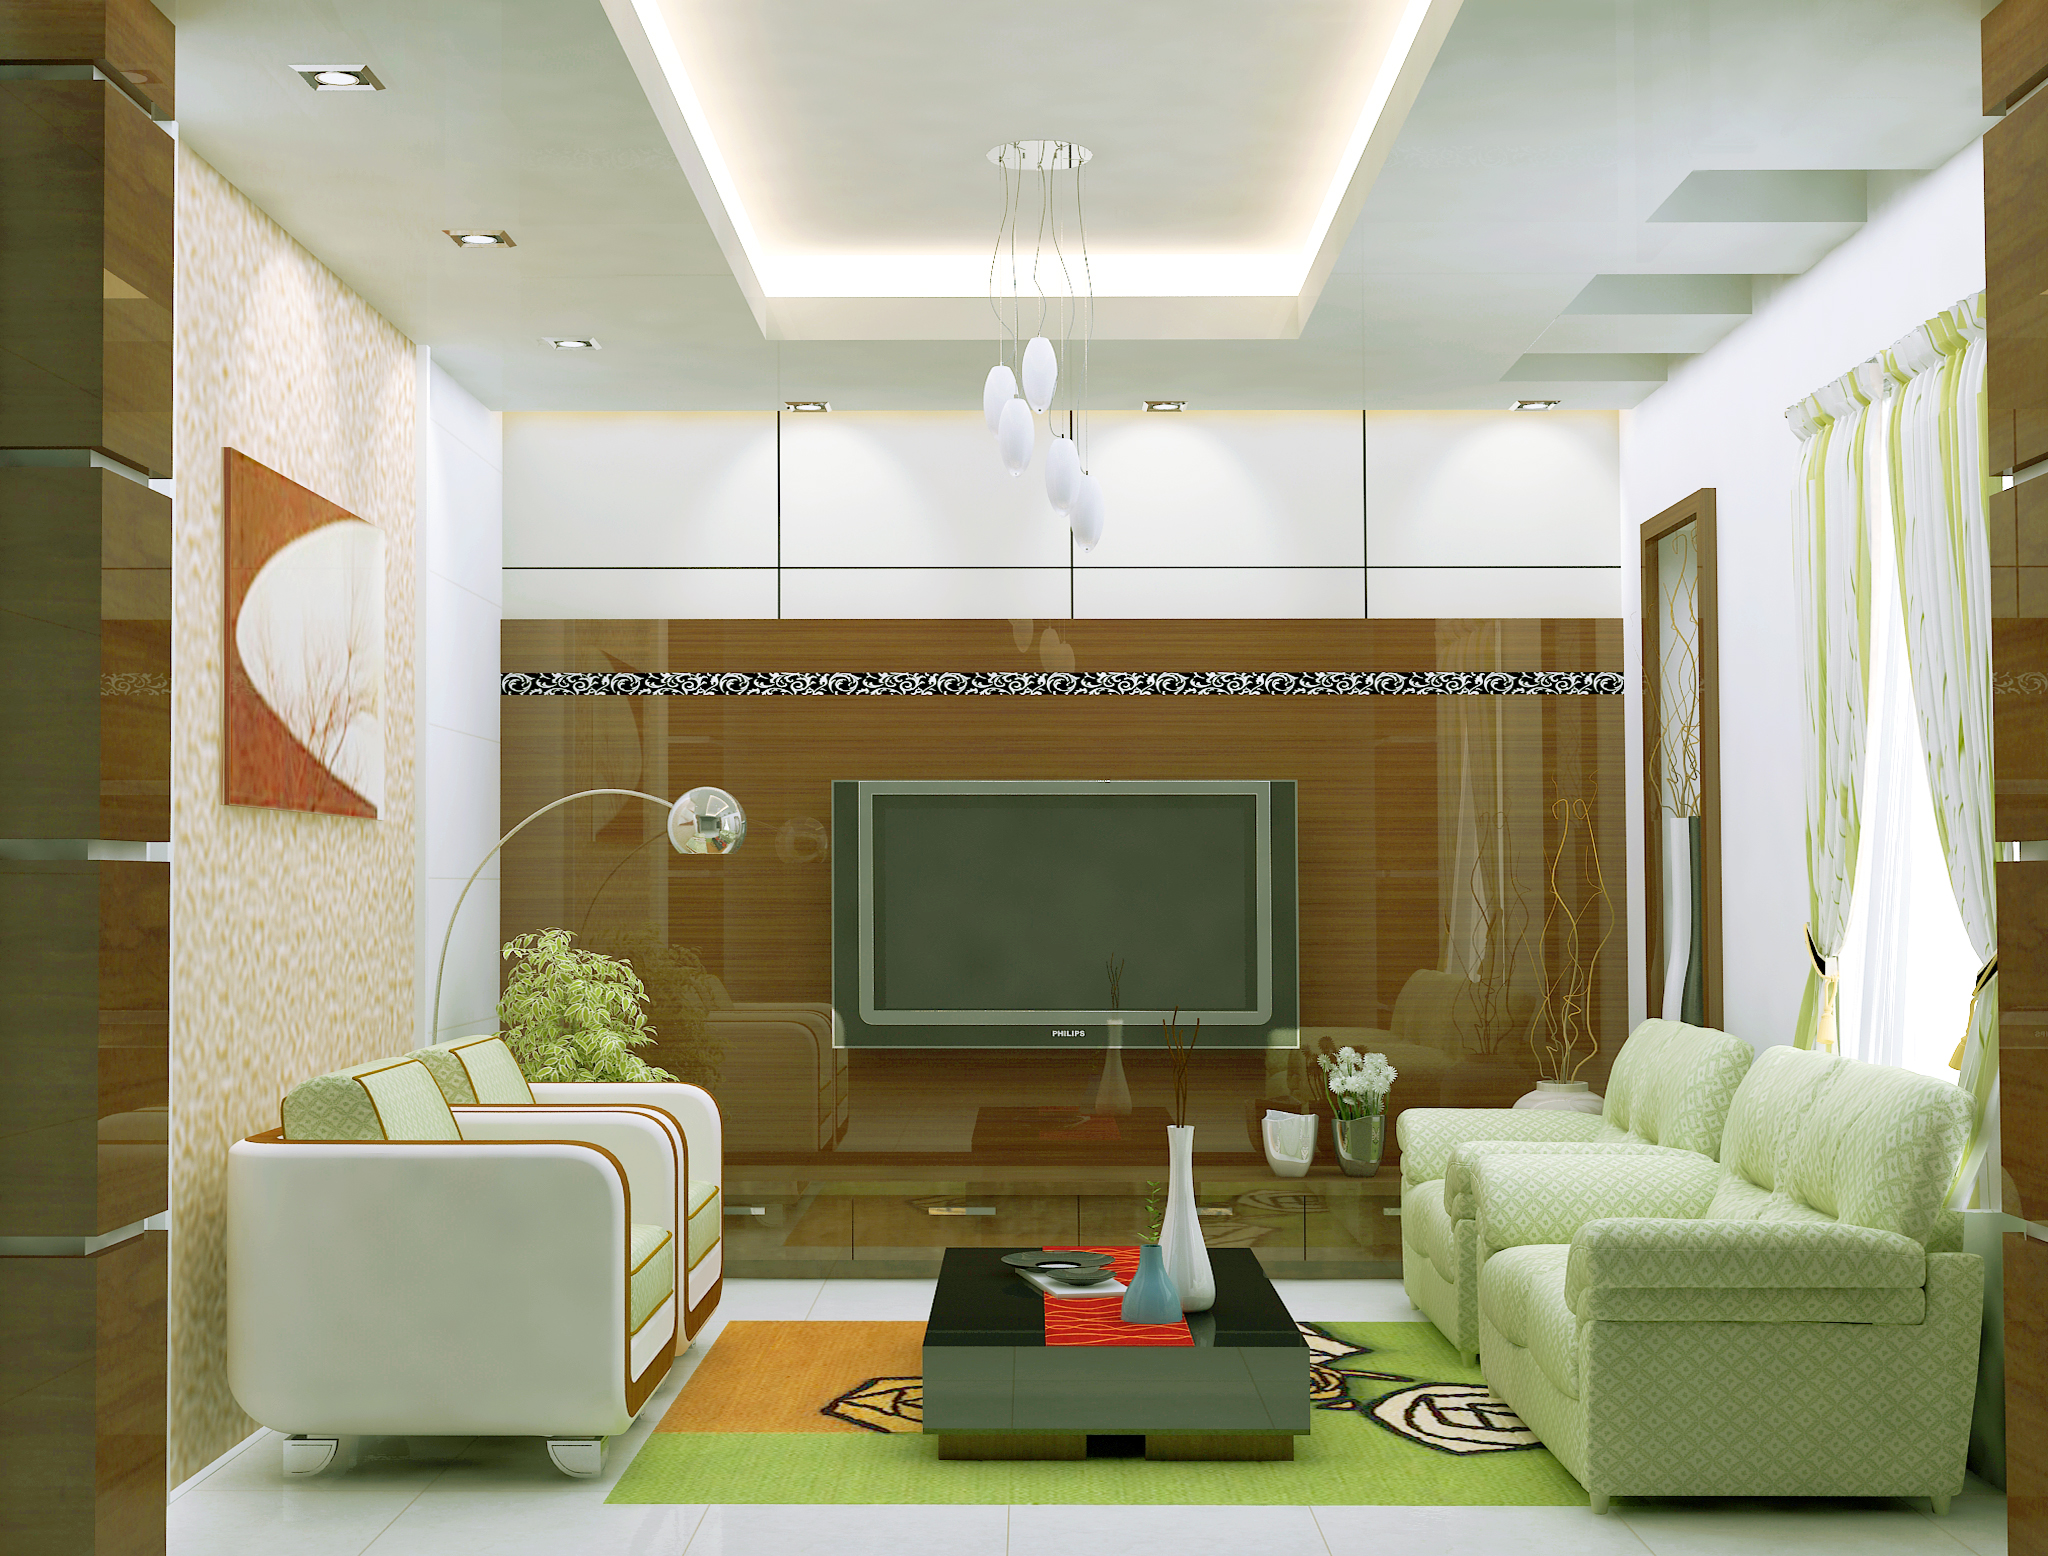 interior designs living modern decor decorating rooms decoration idea homes layout luxury